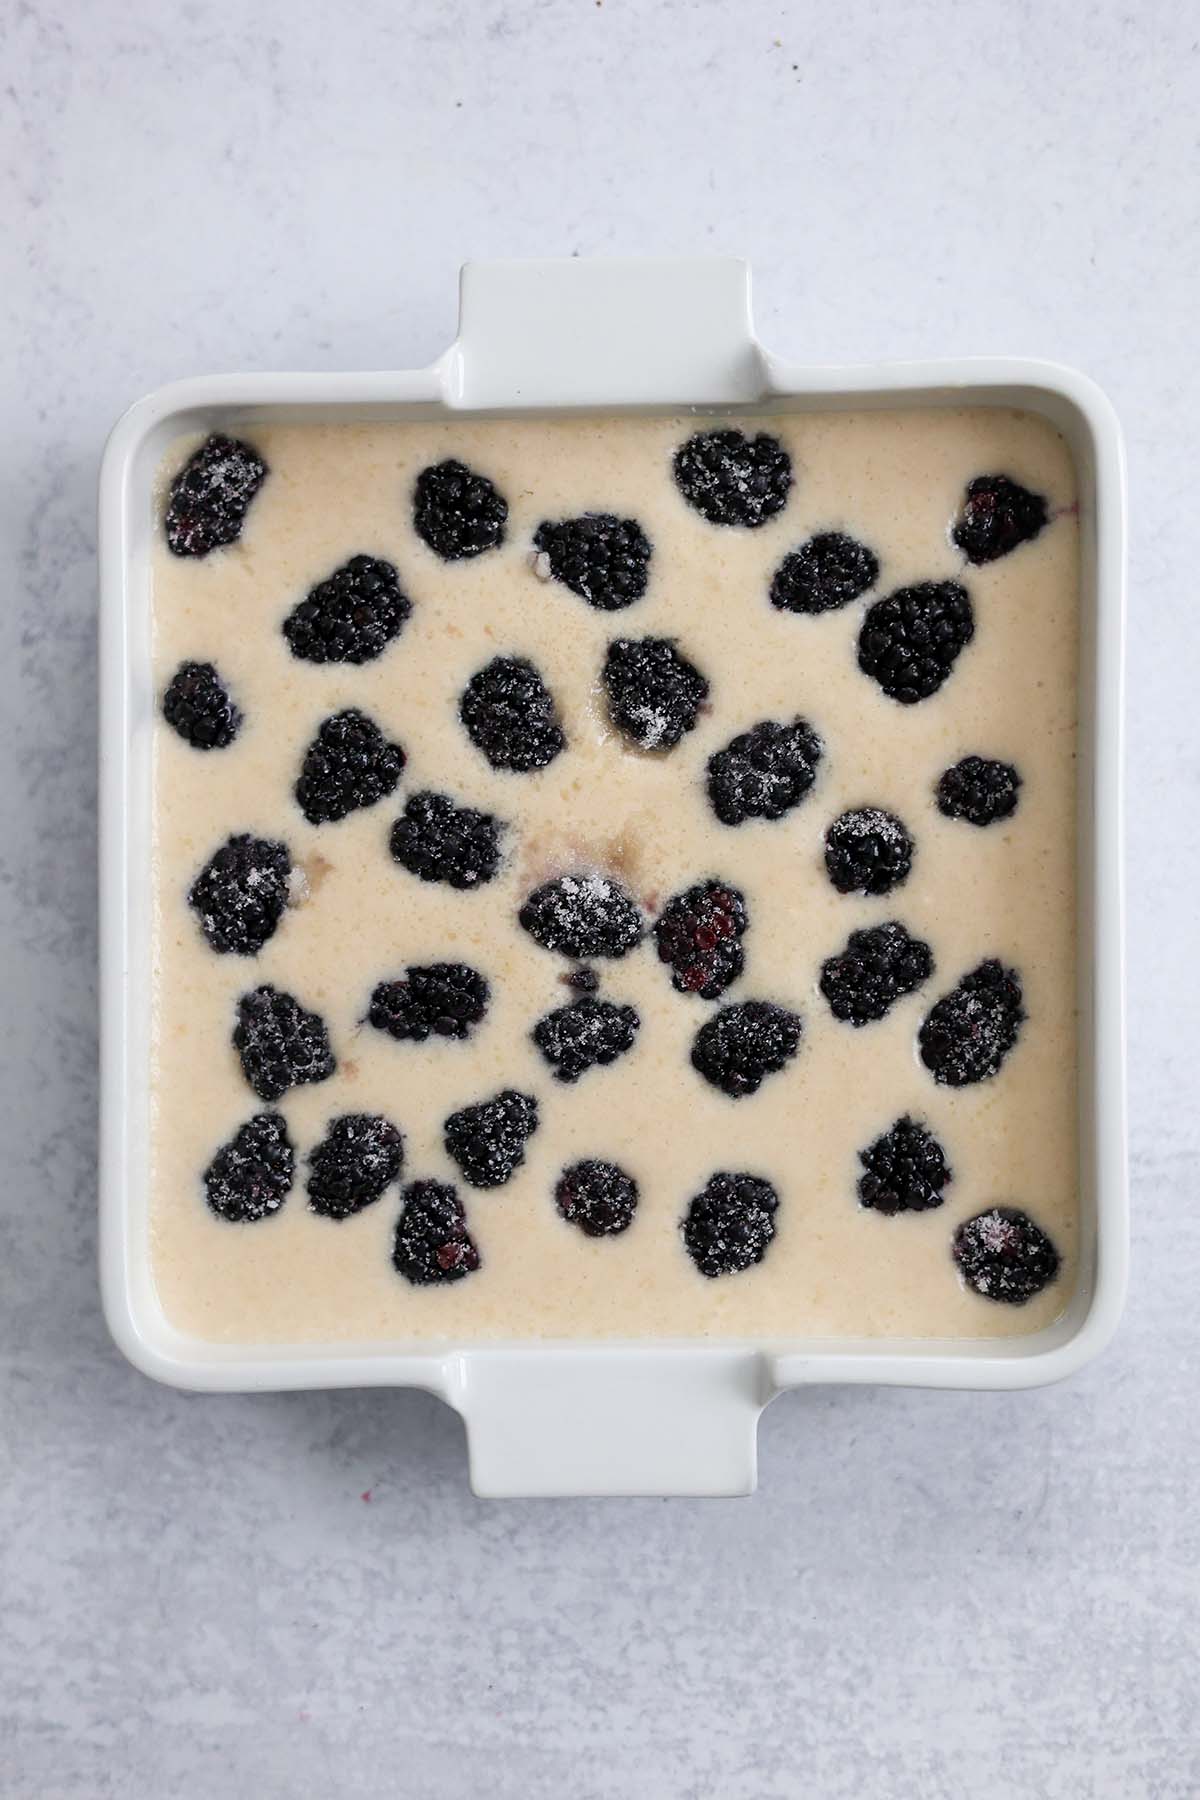 cobbler batter and fresh blackberries in a white 9x9 baking dish. 